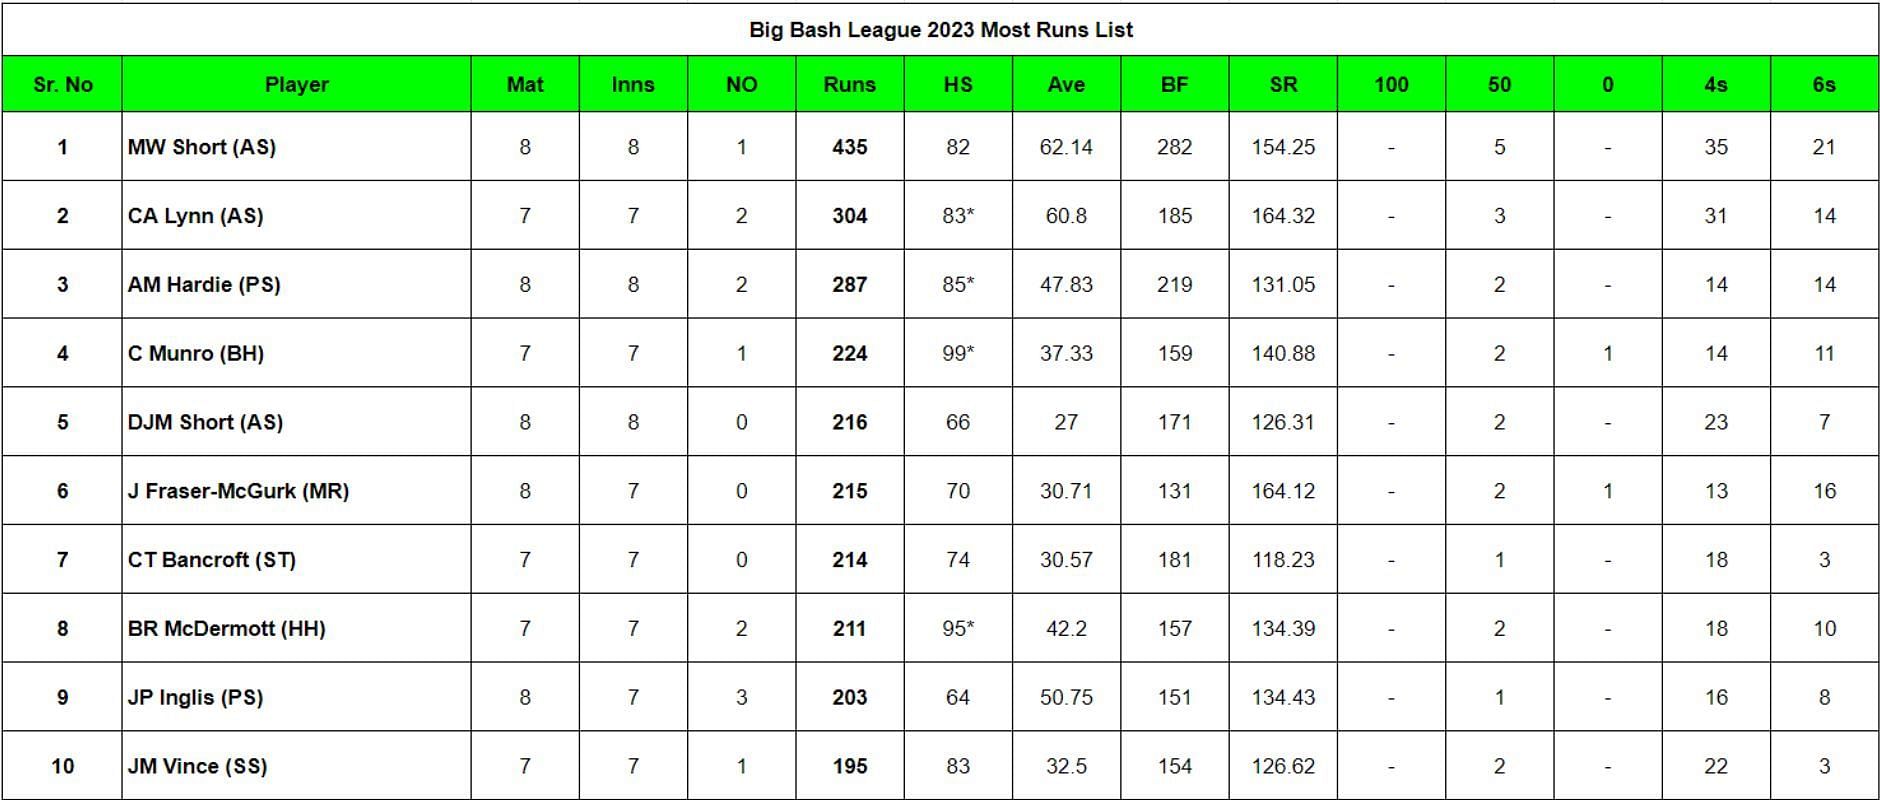 Big Bash League 2023 Most Runs List